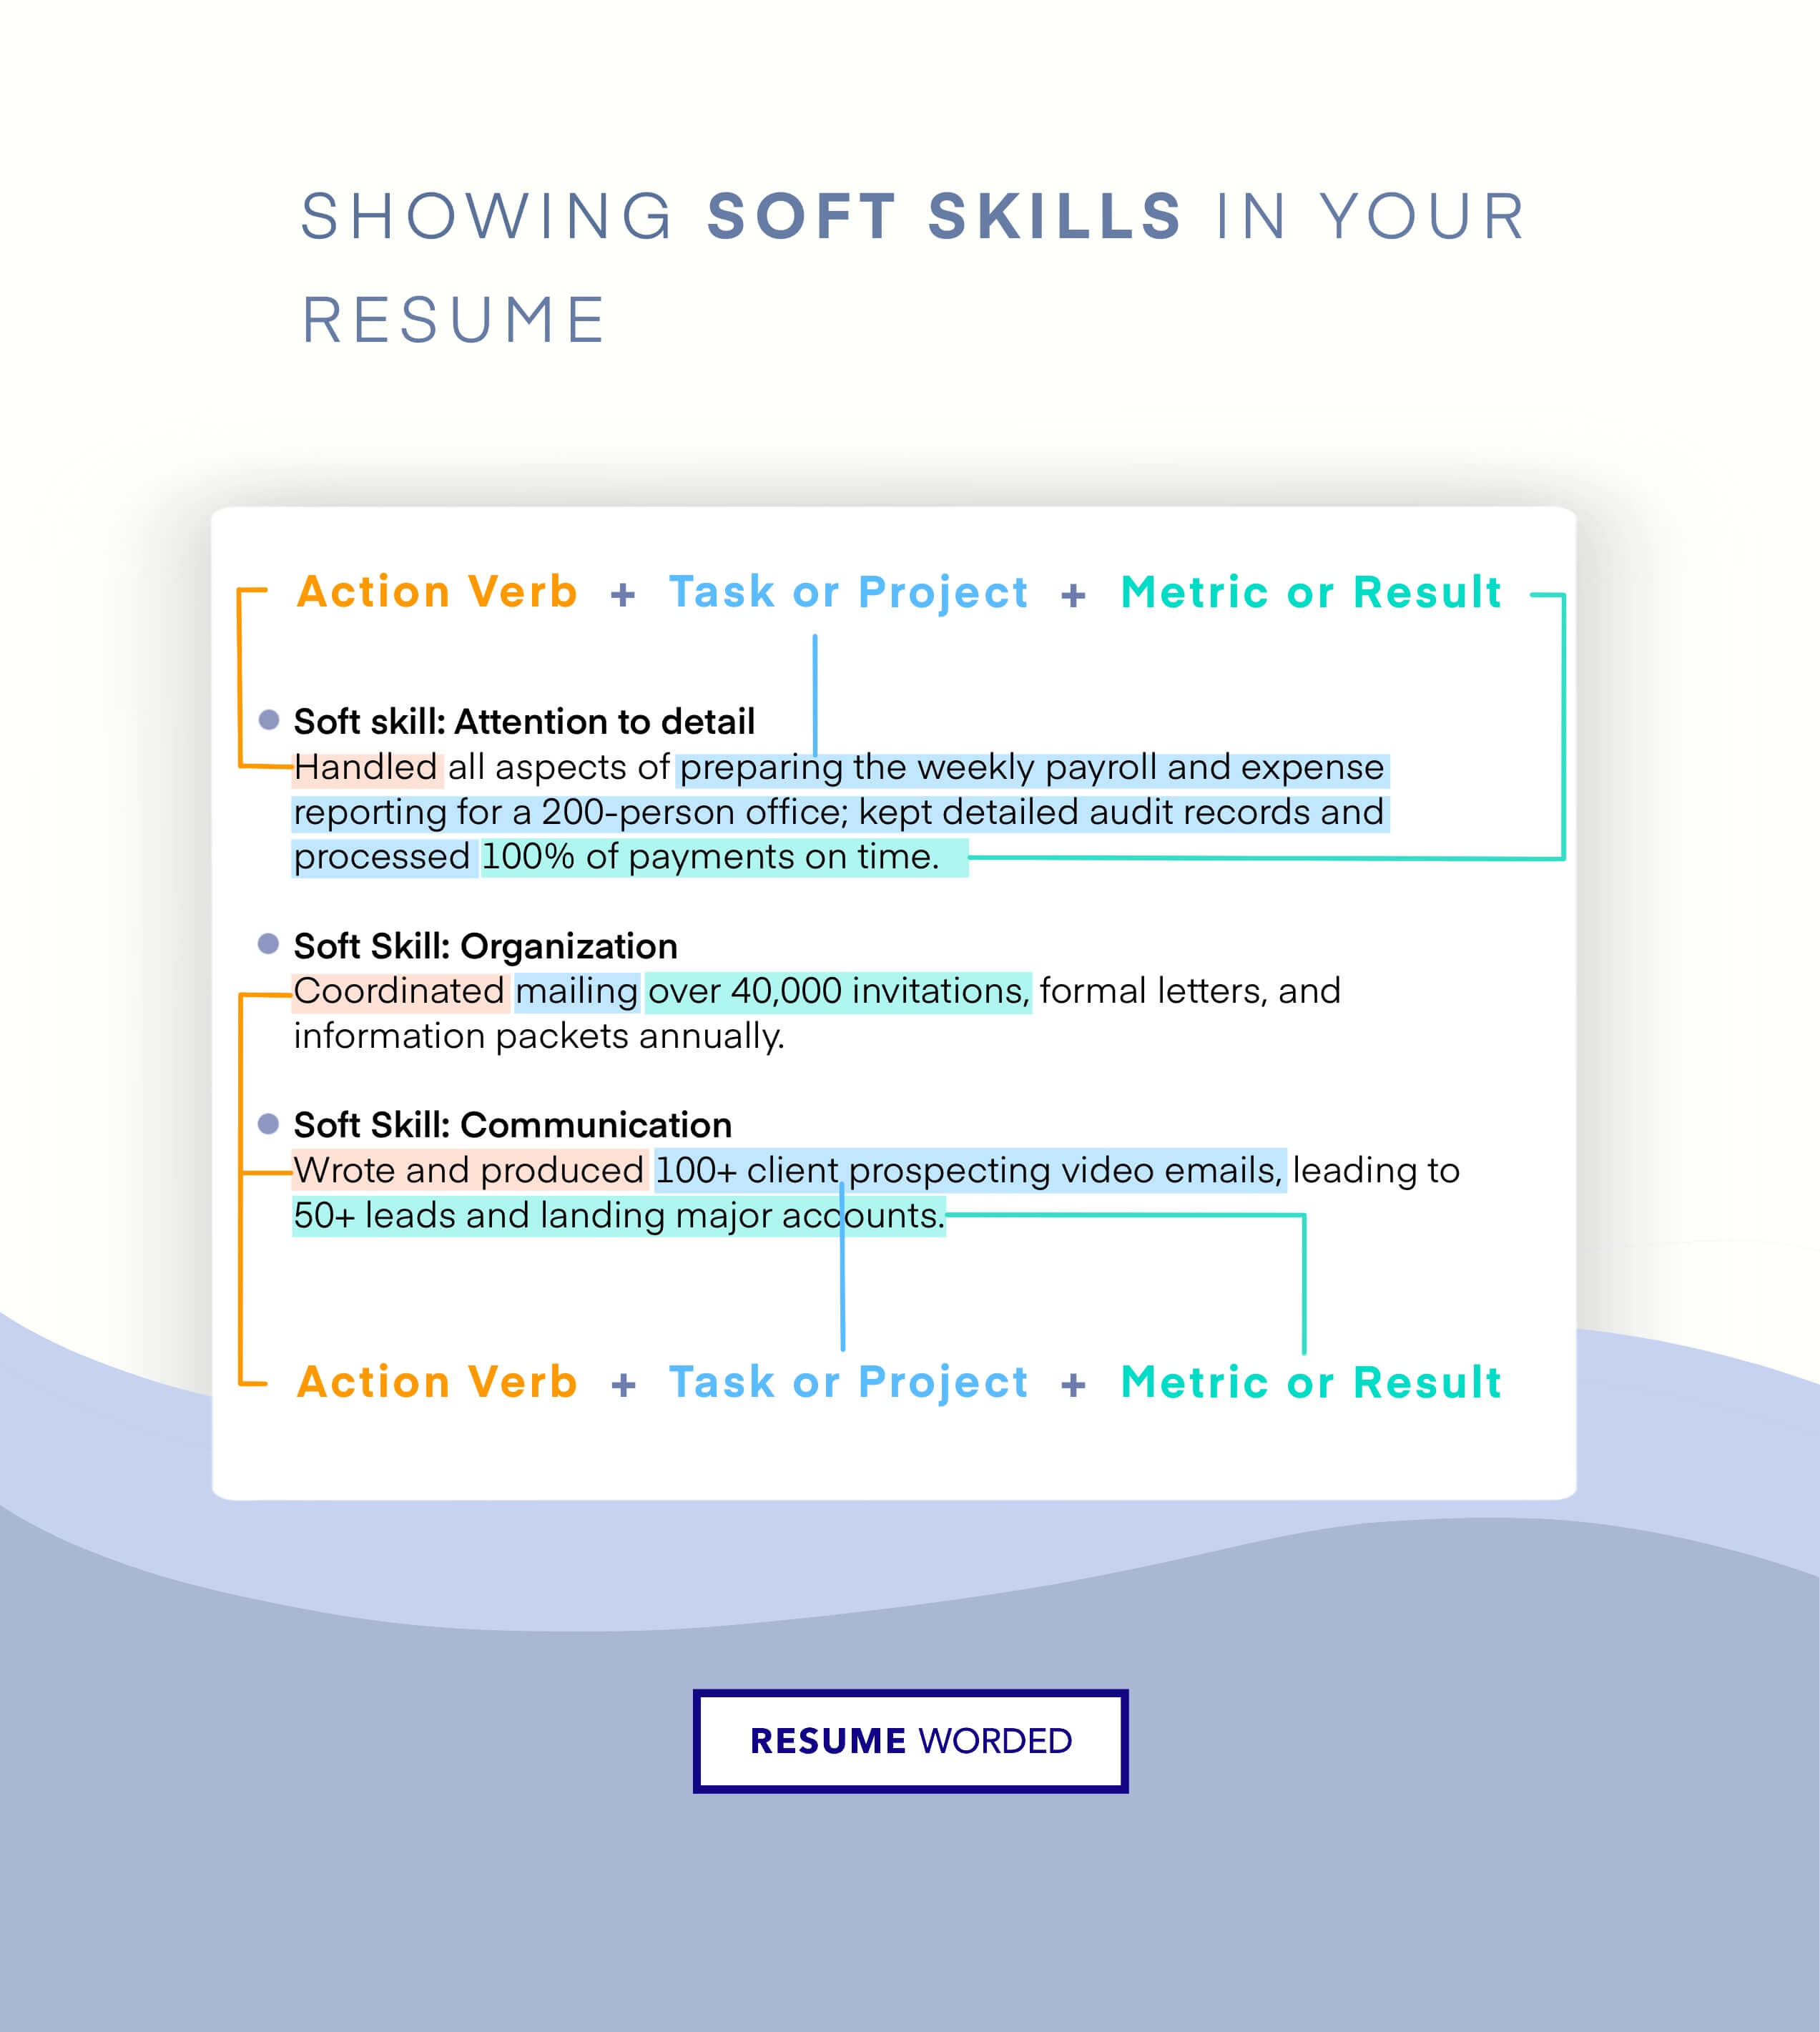 Showcase soft skills - Junior Project Manager CV